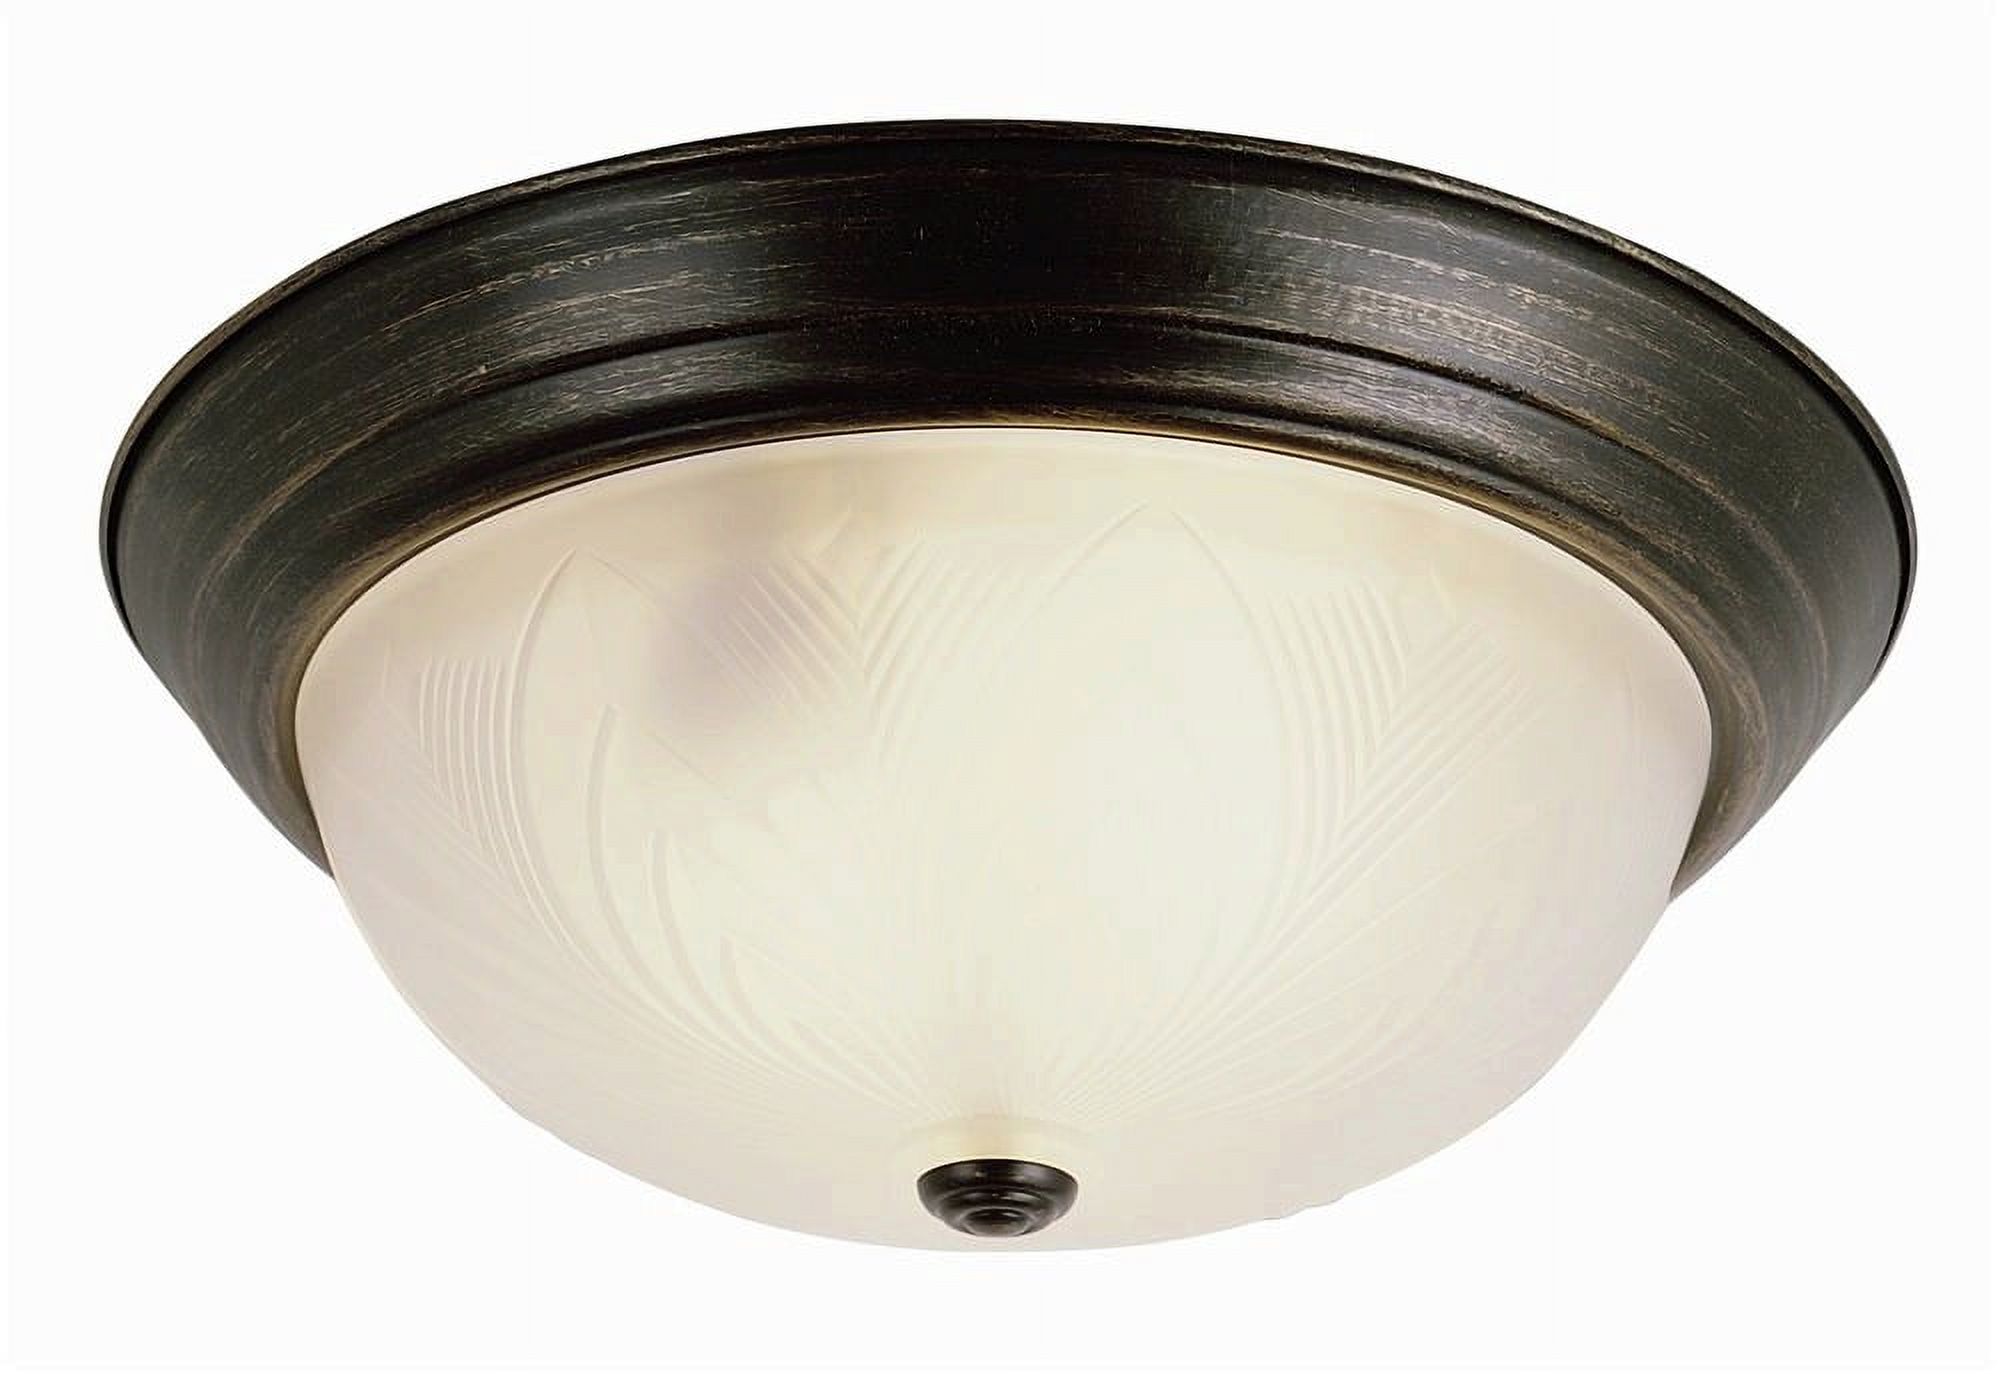 58802 ROB-Trans Globe Lighting-Back To Basics - Three Light Flush Mount - image 1 of 2